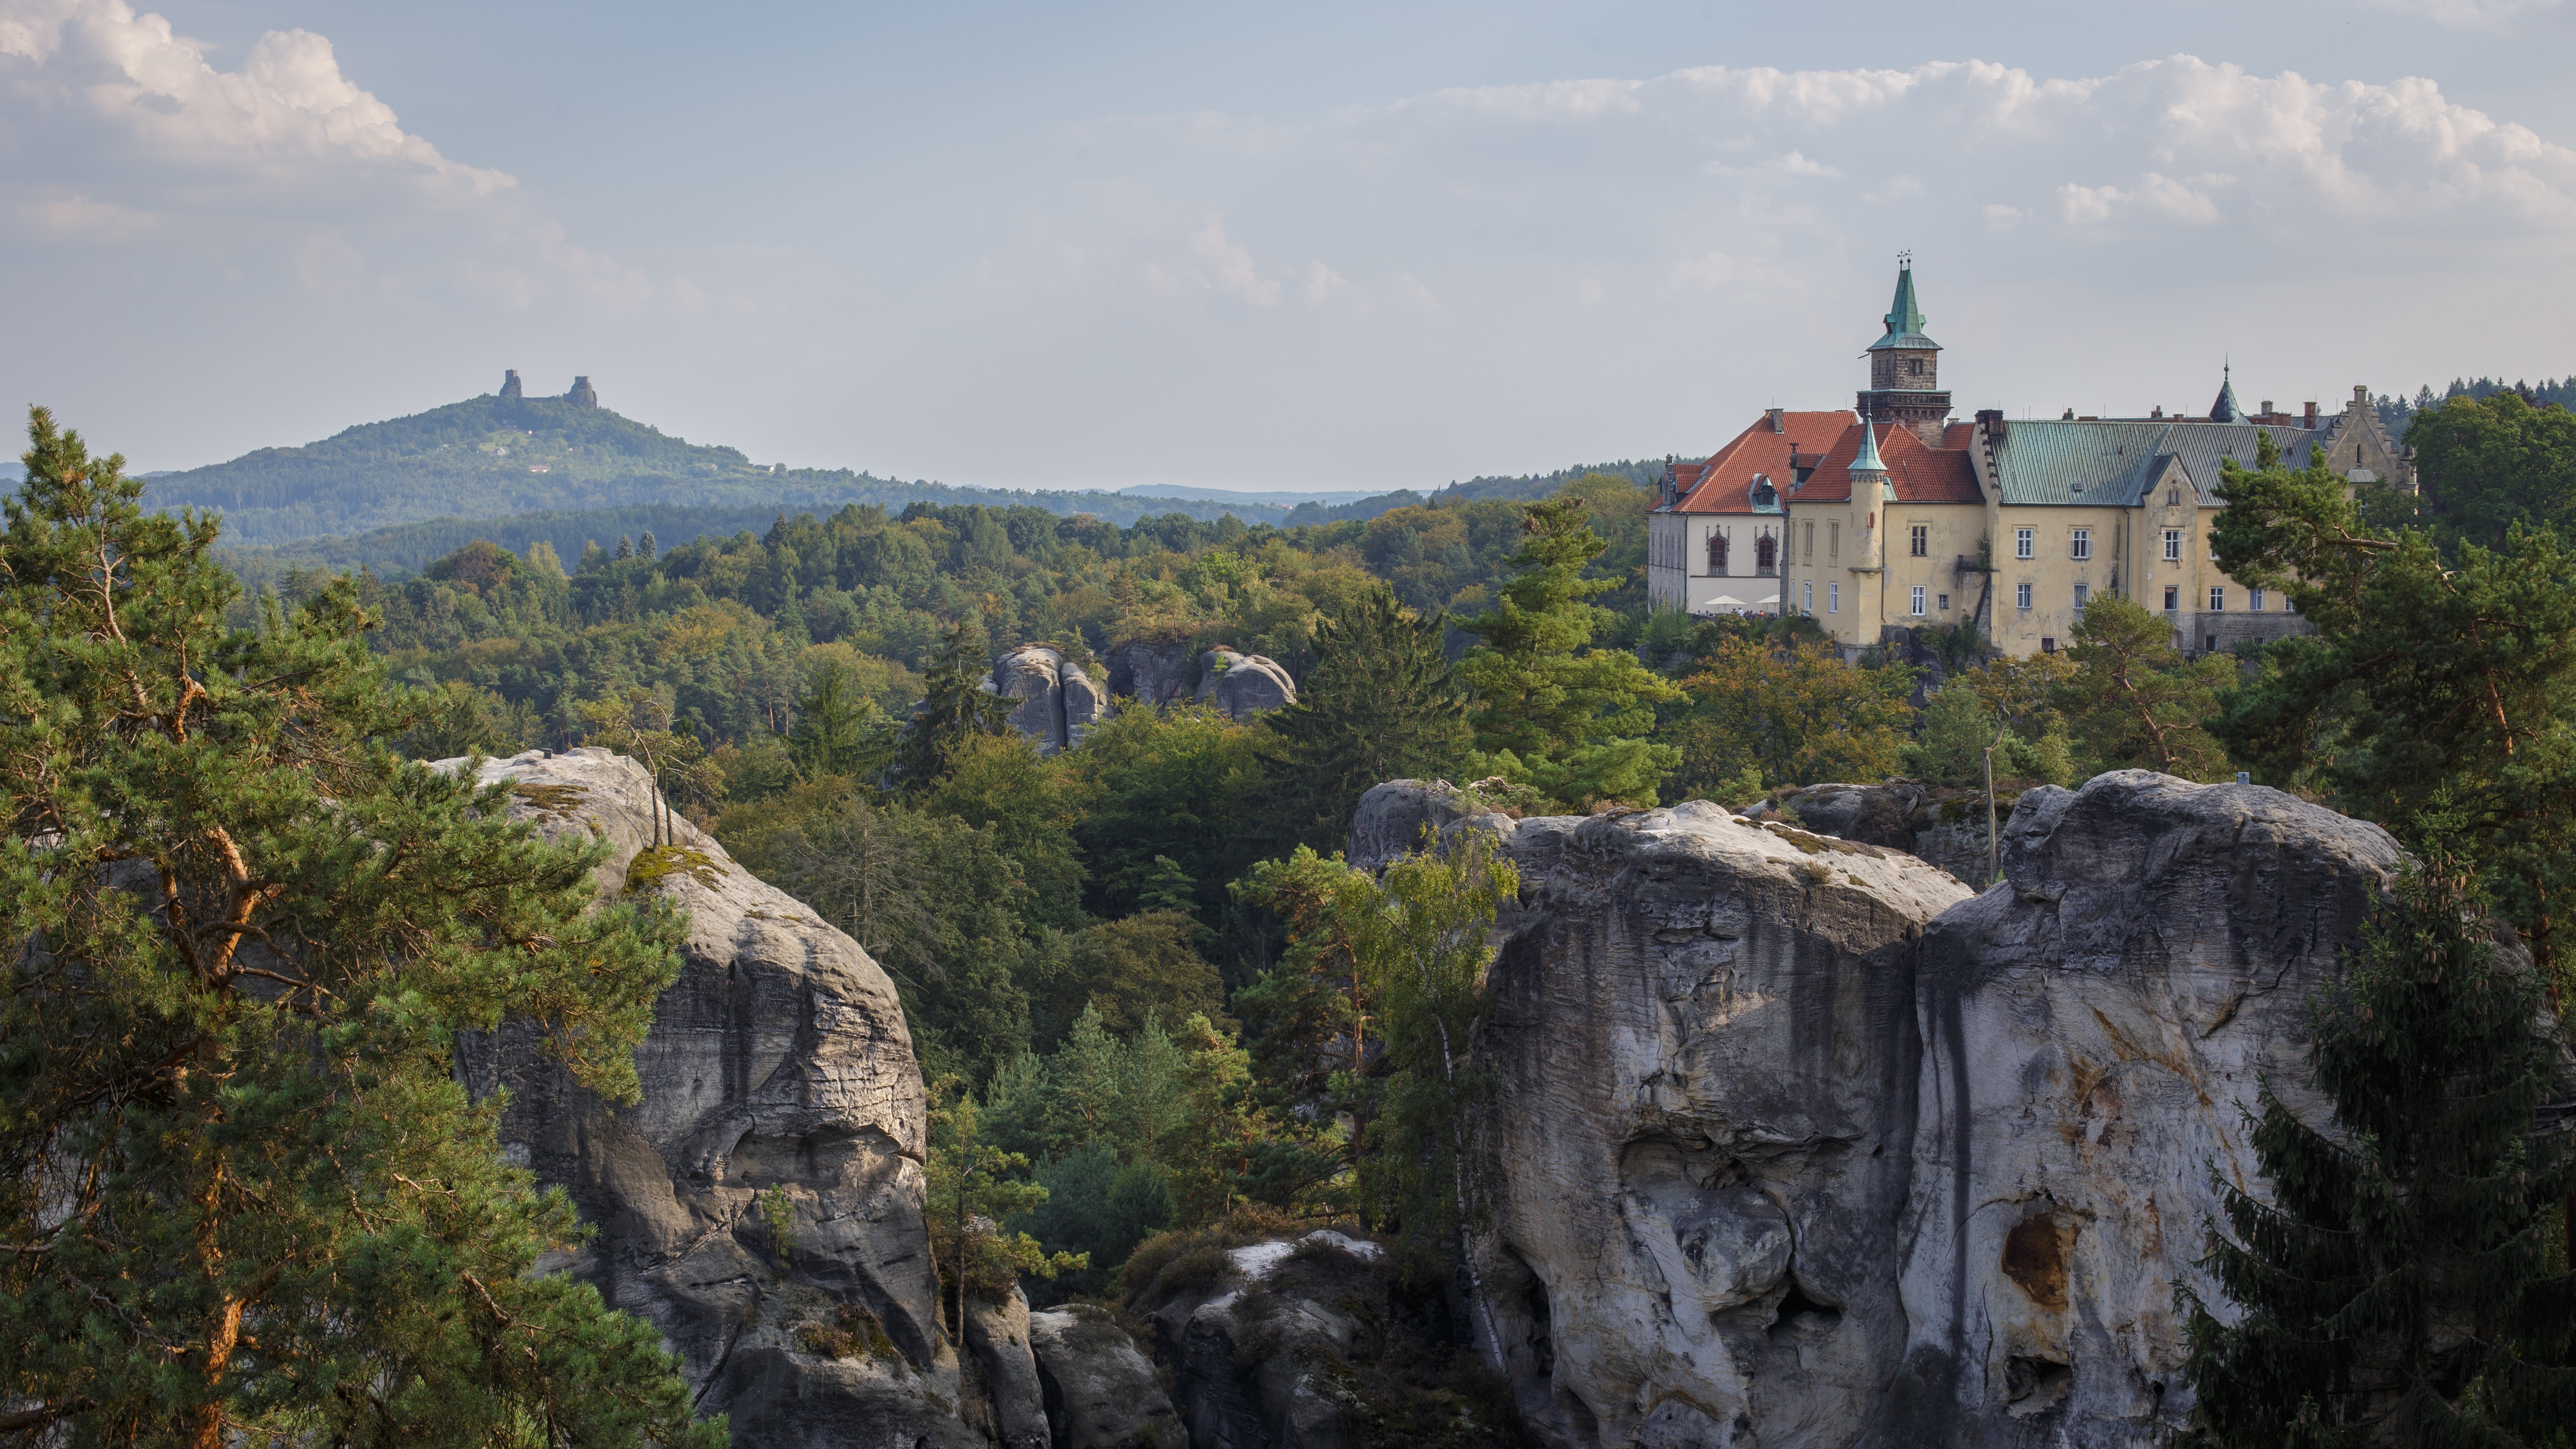 Kraj plný přírody – Liberecký kraj